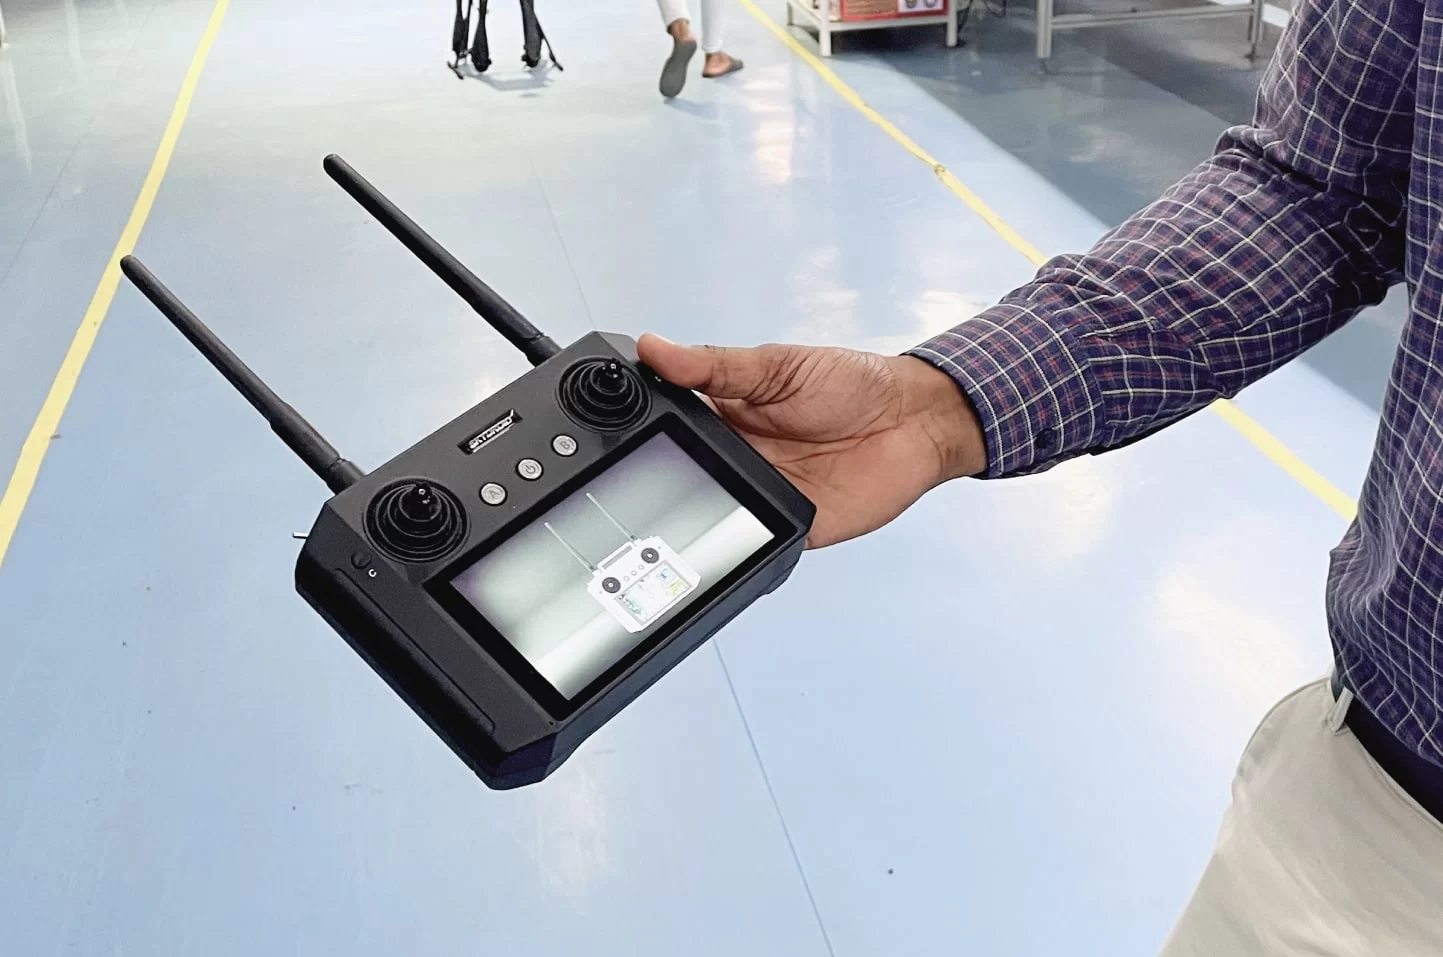 prana air quality drone remote controller